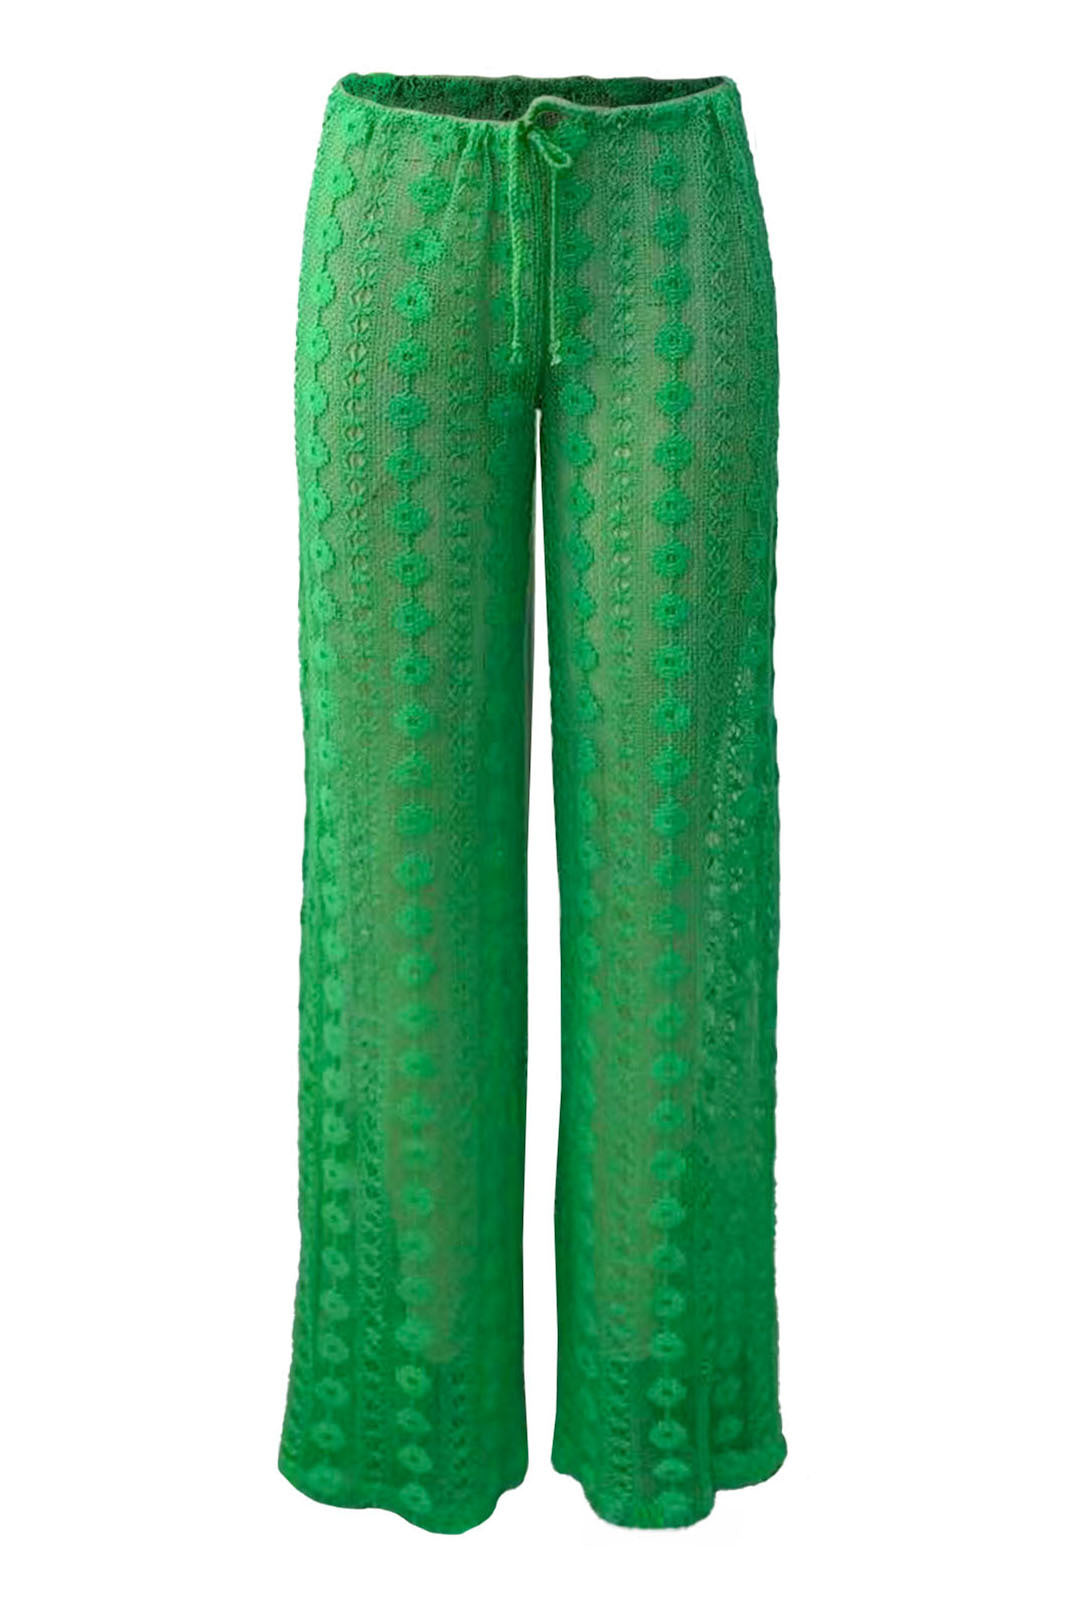 Jagger Green 70s Lace Crochet Straight Leg Trousers